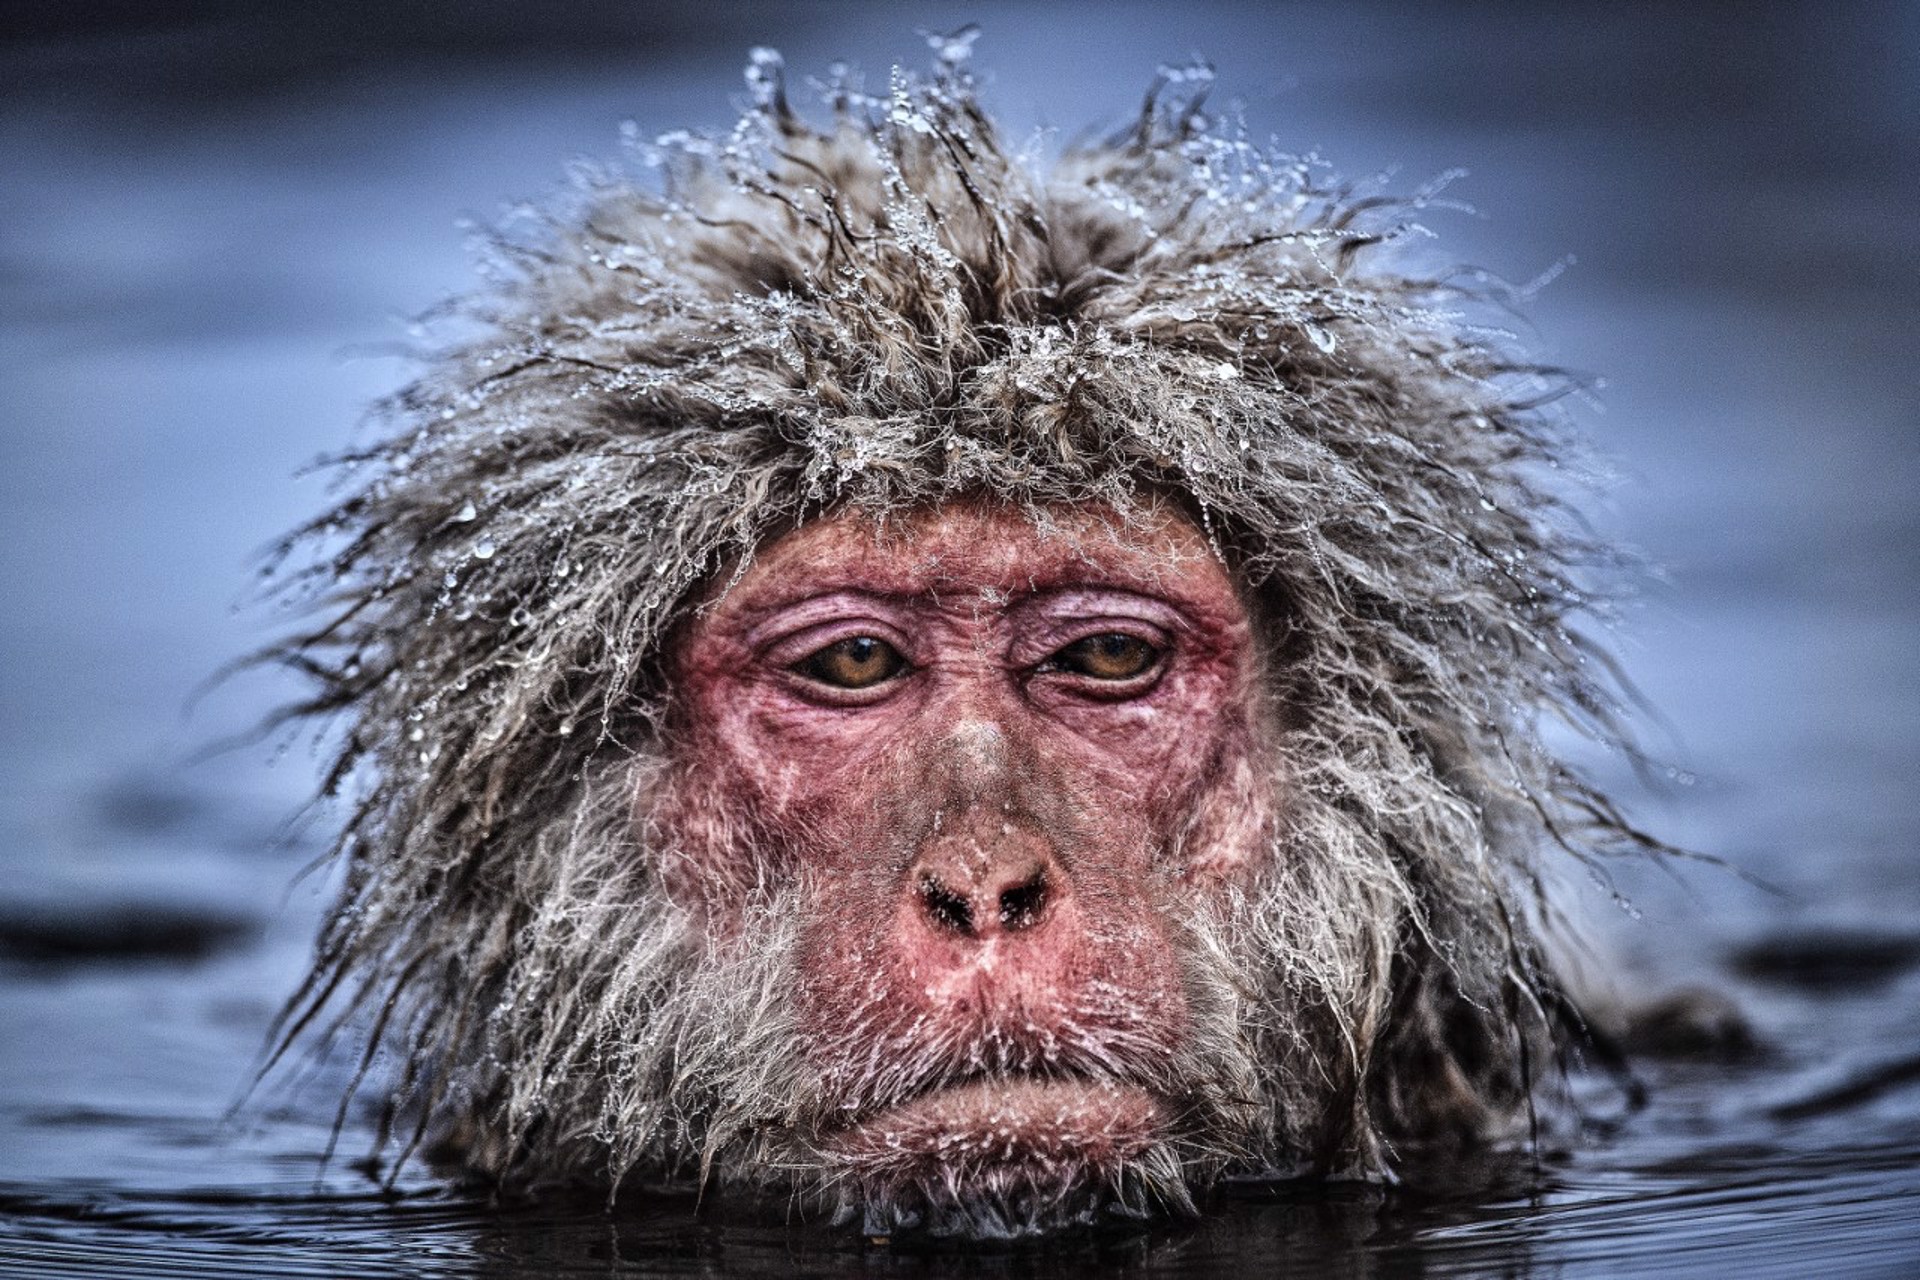 Grumpy Monkey (Color) by David Yarrow